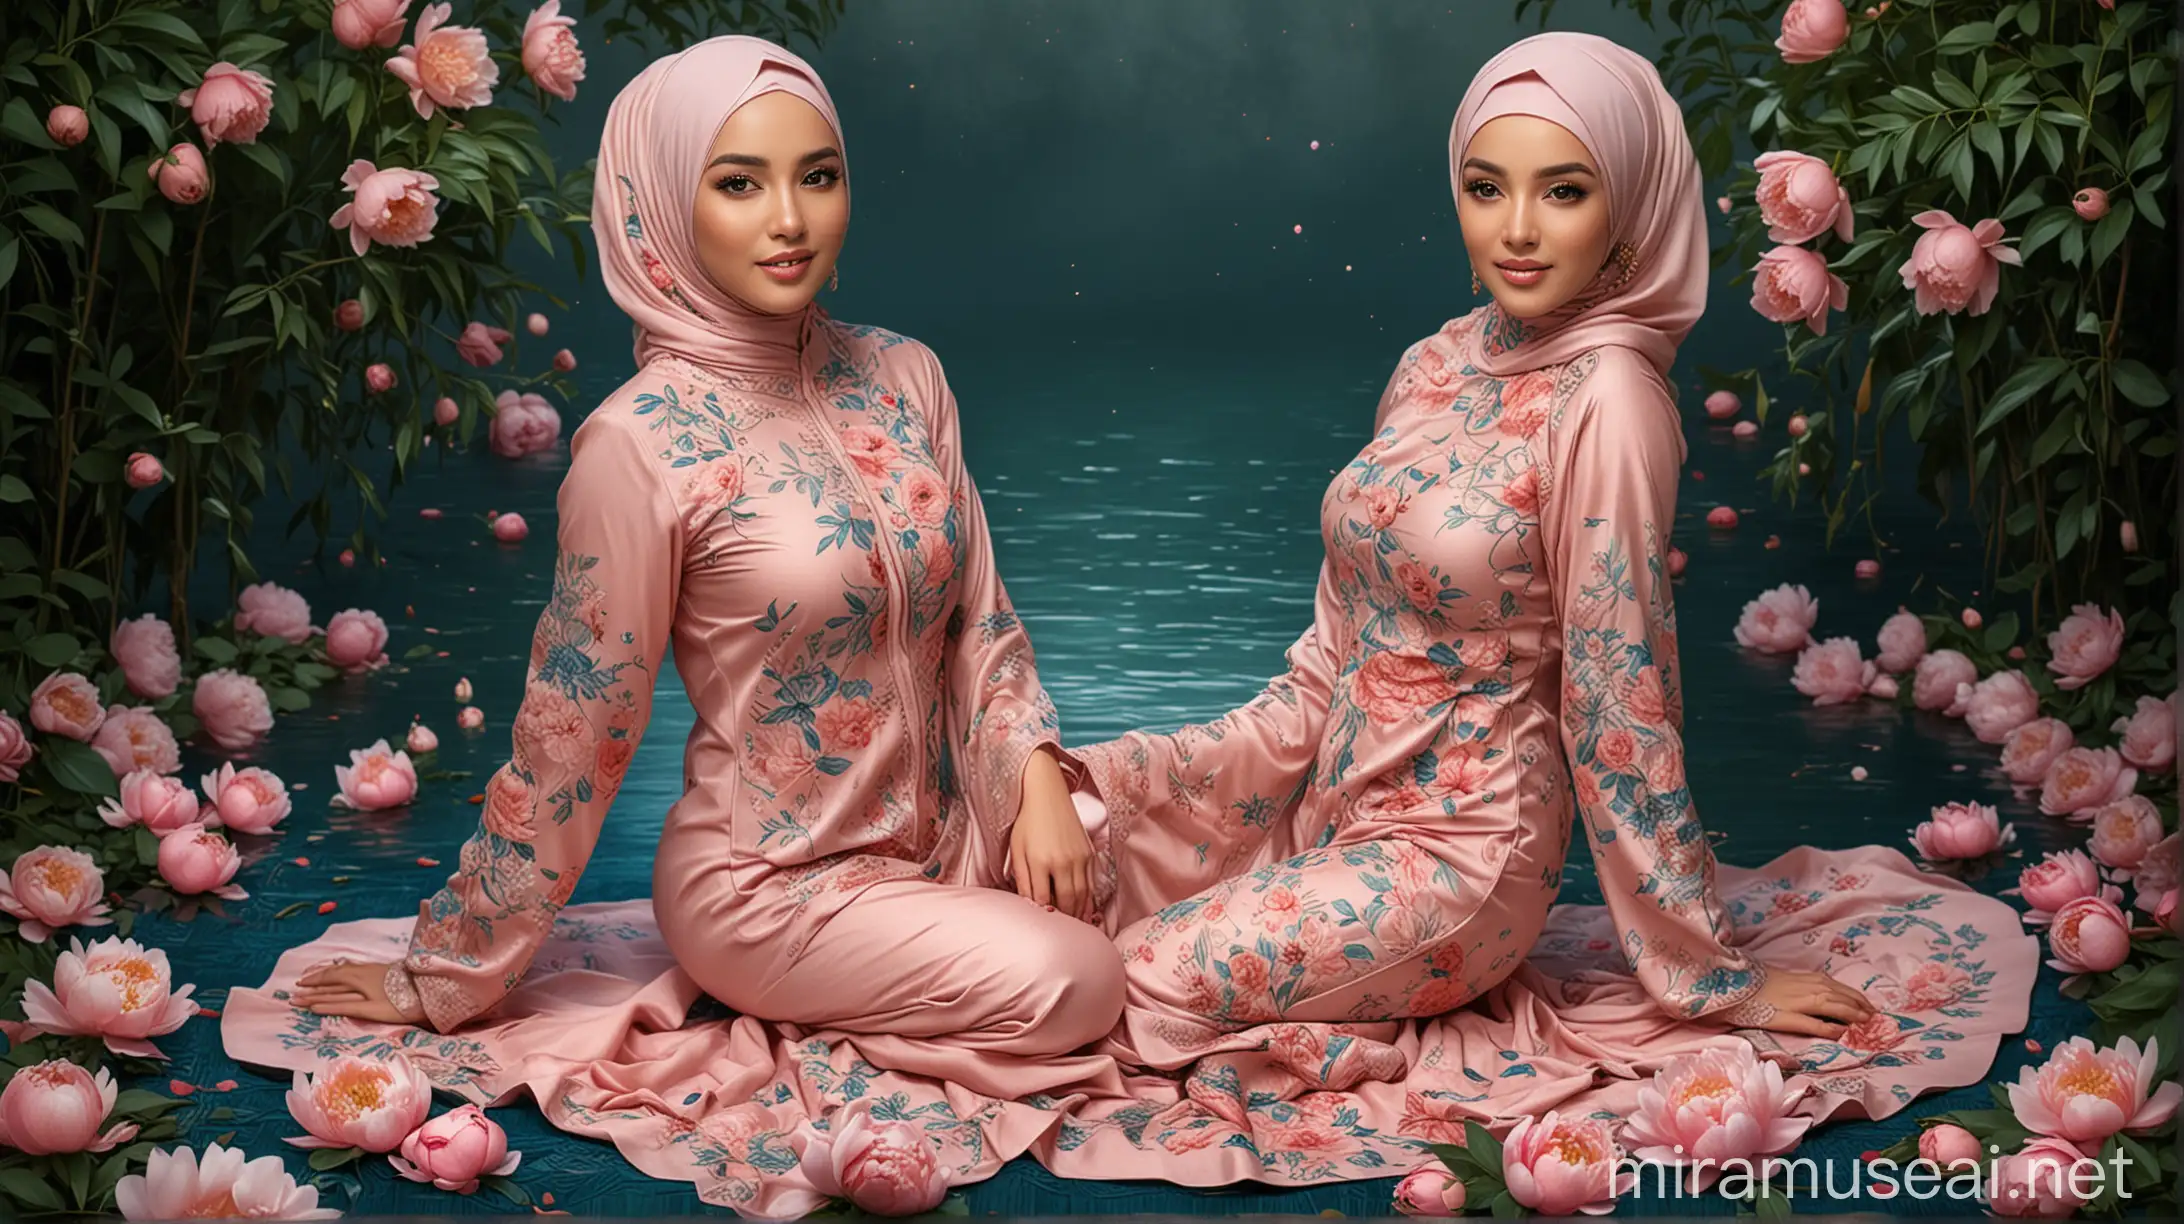 Stunning Middleaged Woman in Hijab Kebaya Amid Peony Blossoms